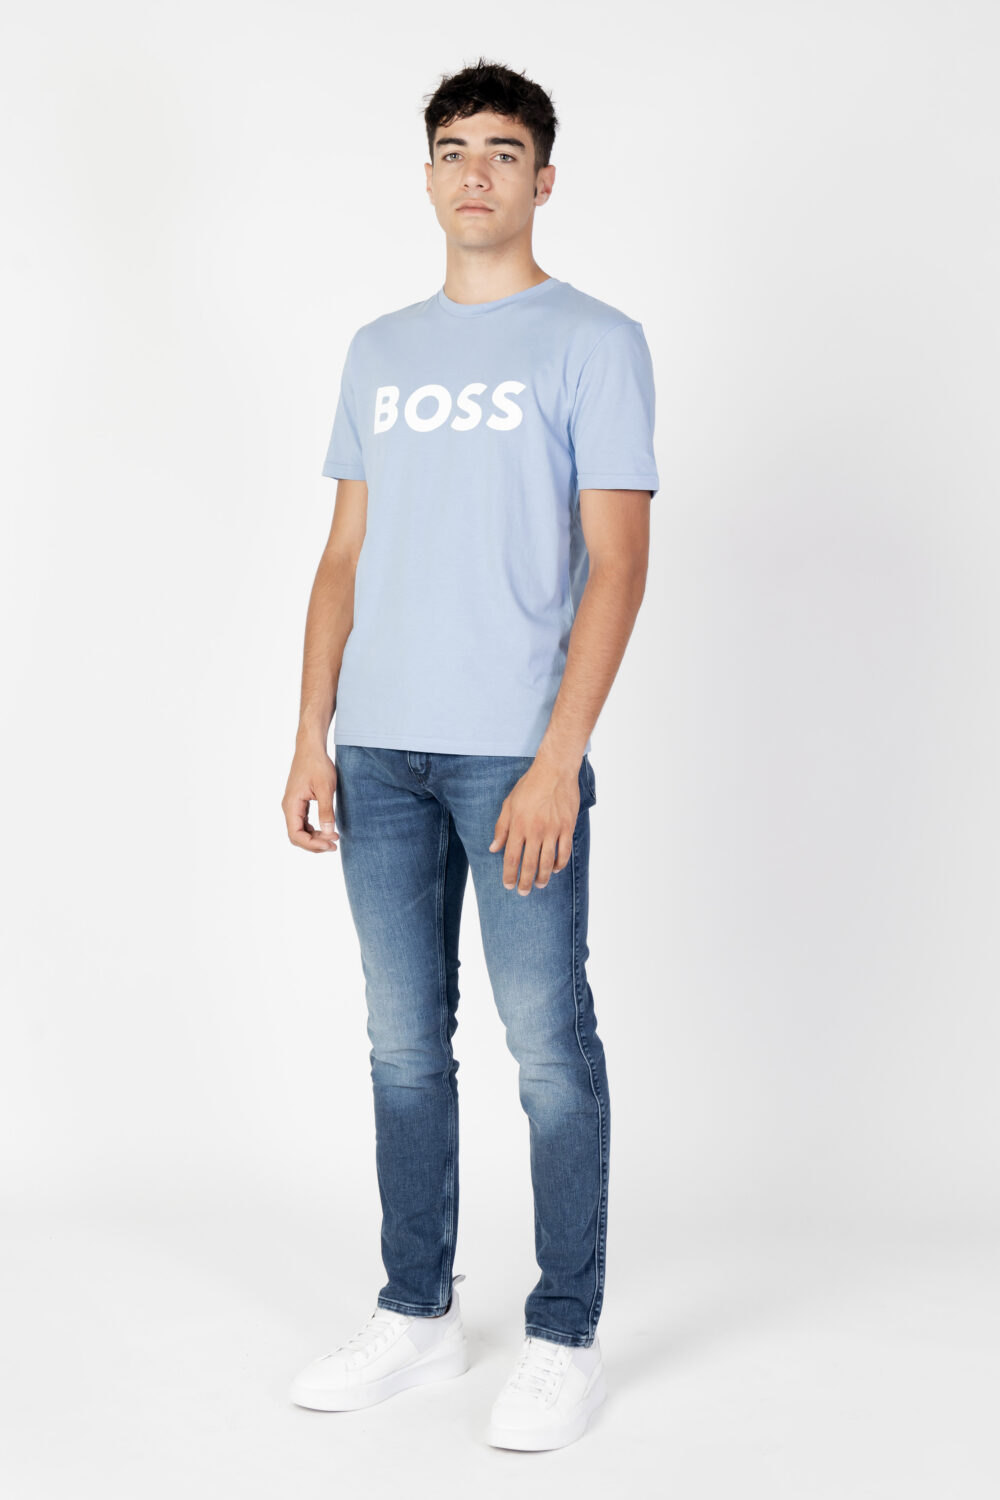 T-shirt Boss thinking 1 Celeste - Foto 3